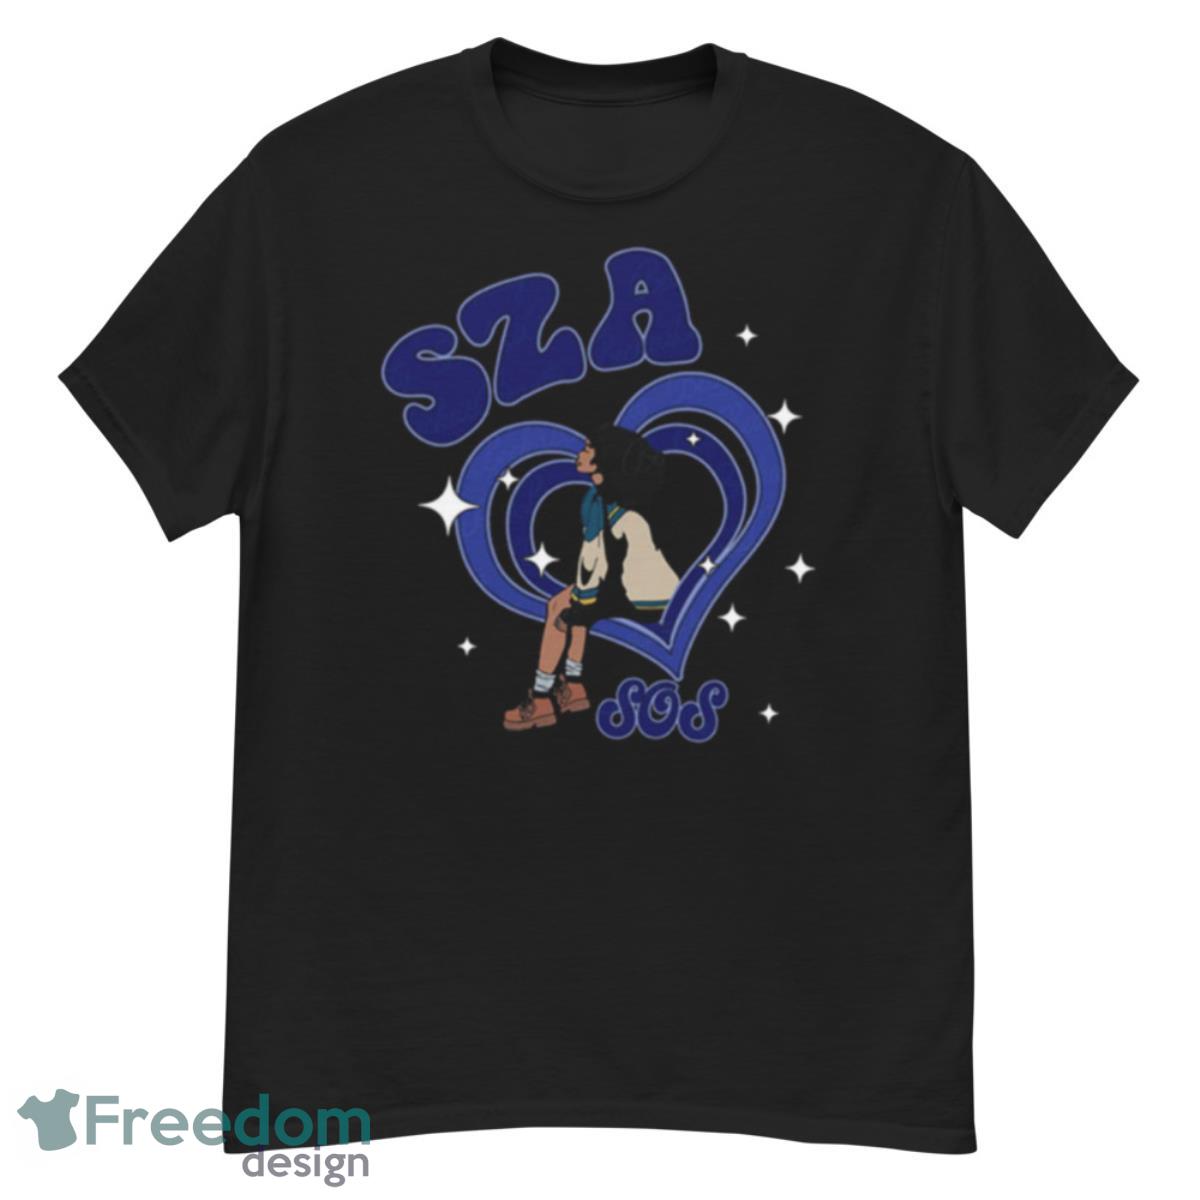 Sza SOS New Album Vintage Sza Fan Gift Shirt - G500 Men’s Classic T-Shirt